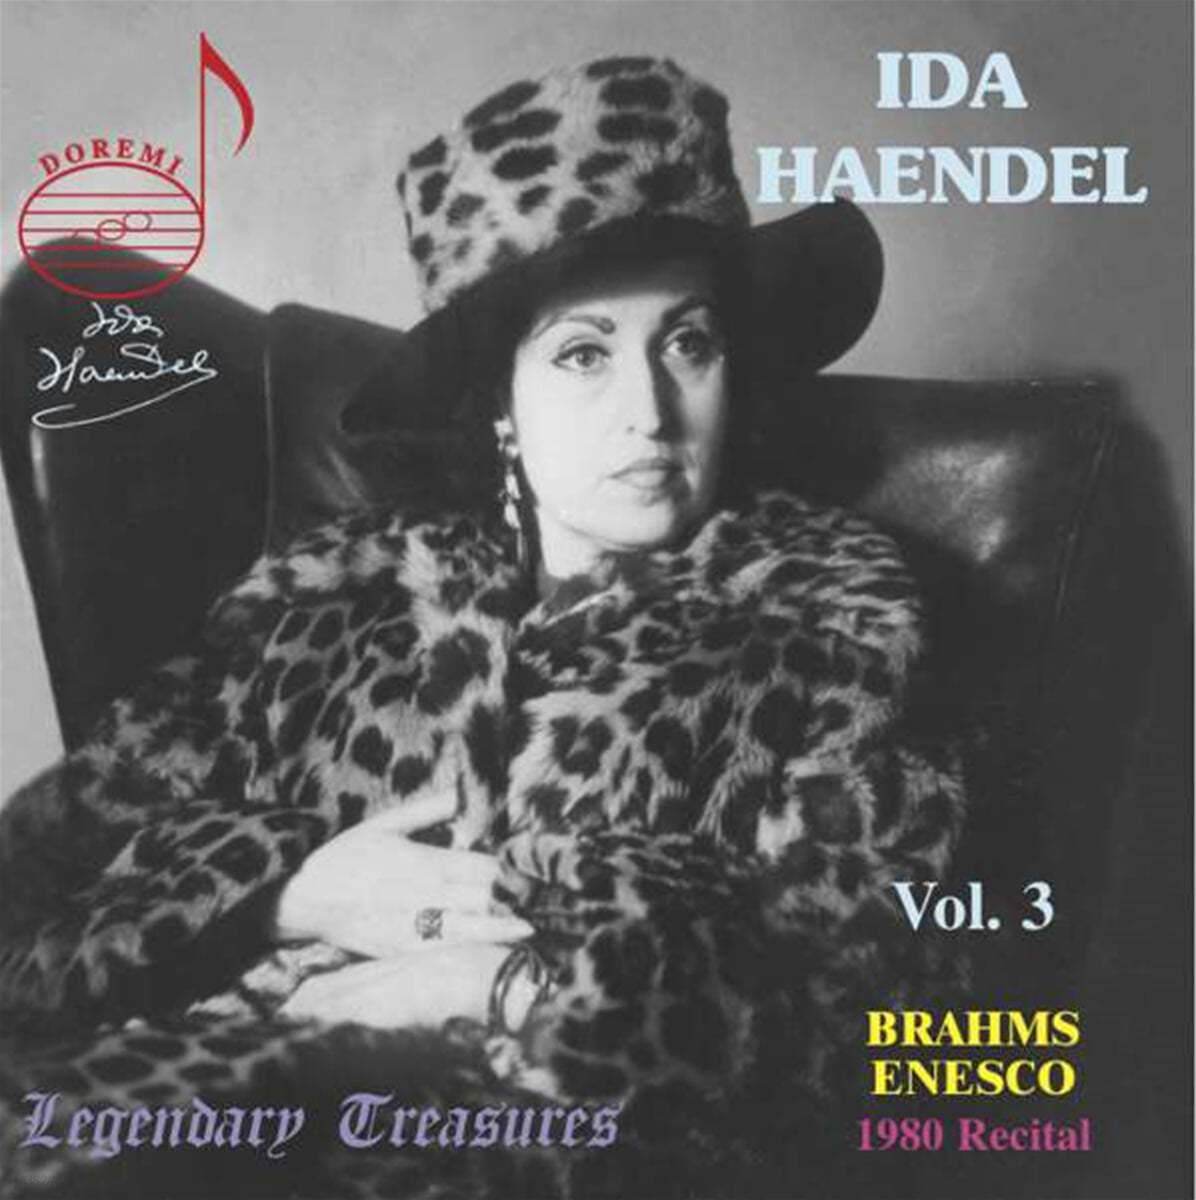 Ida Haendel 이다 헨델 바이올린 연주 모음 (Legendary Treasures Vol. 3) 